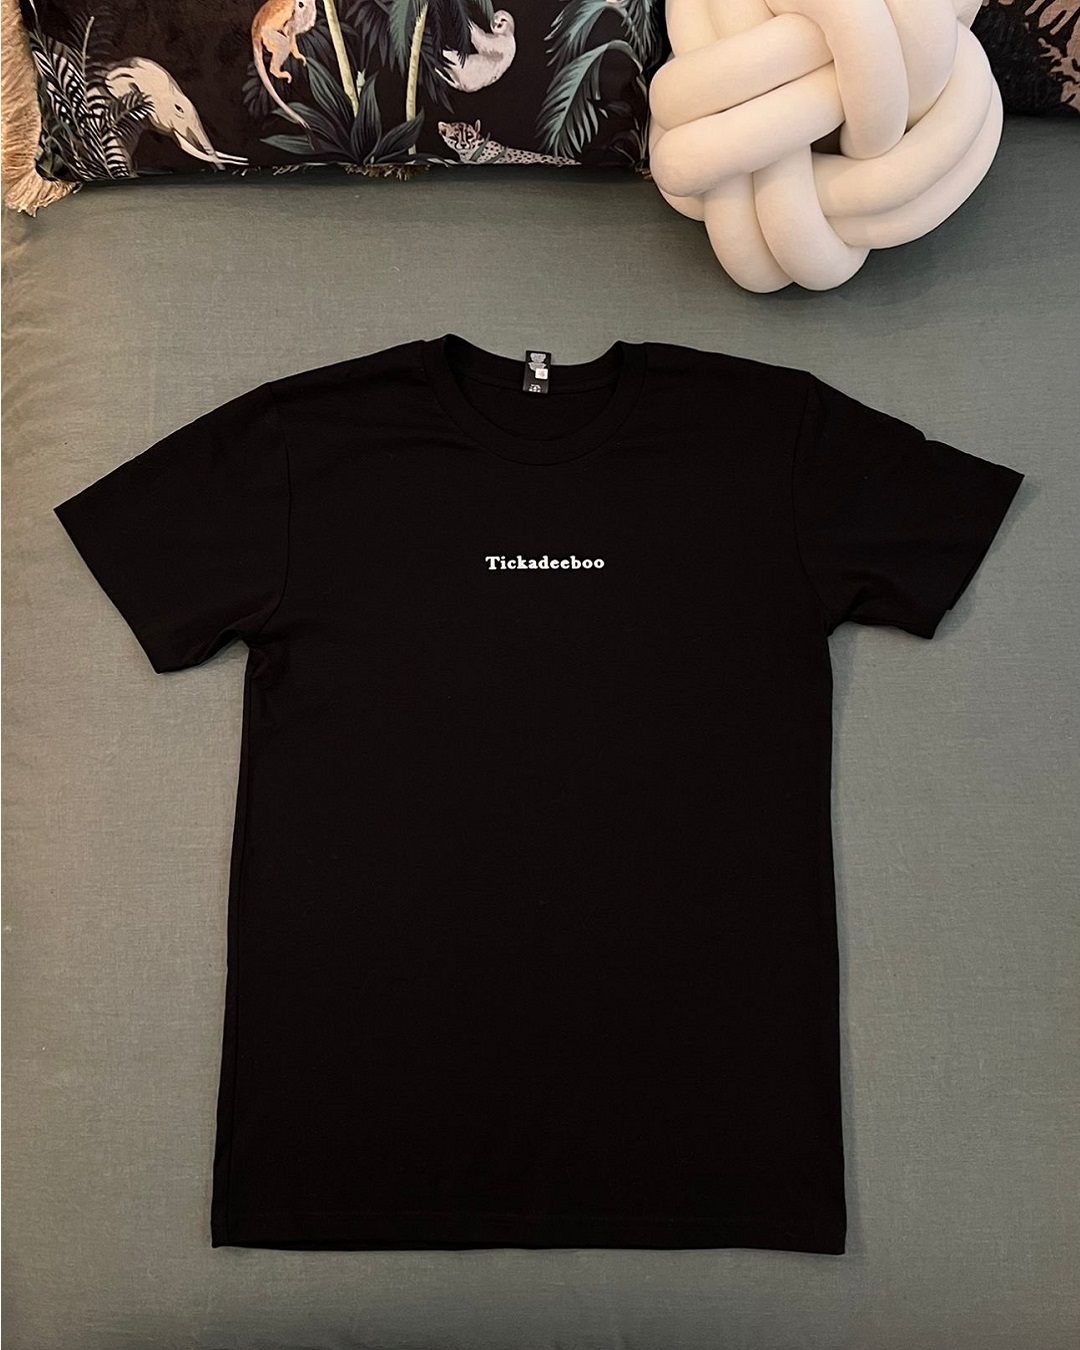 Tickadeeboo T-shirt in black